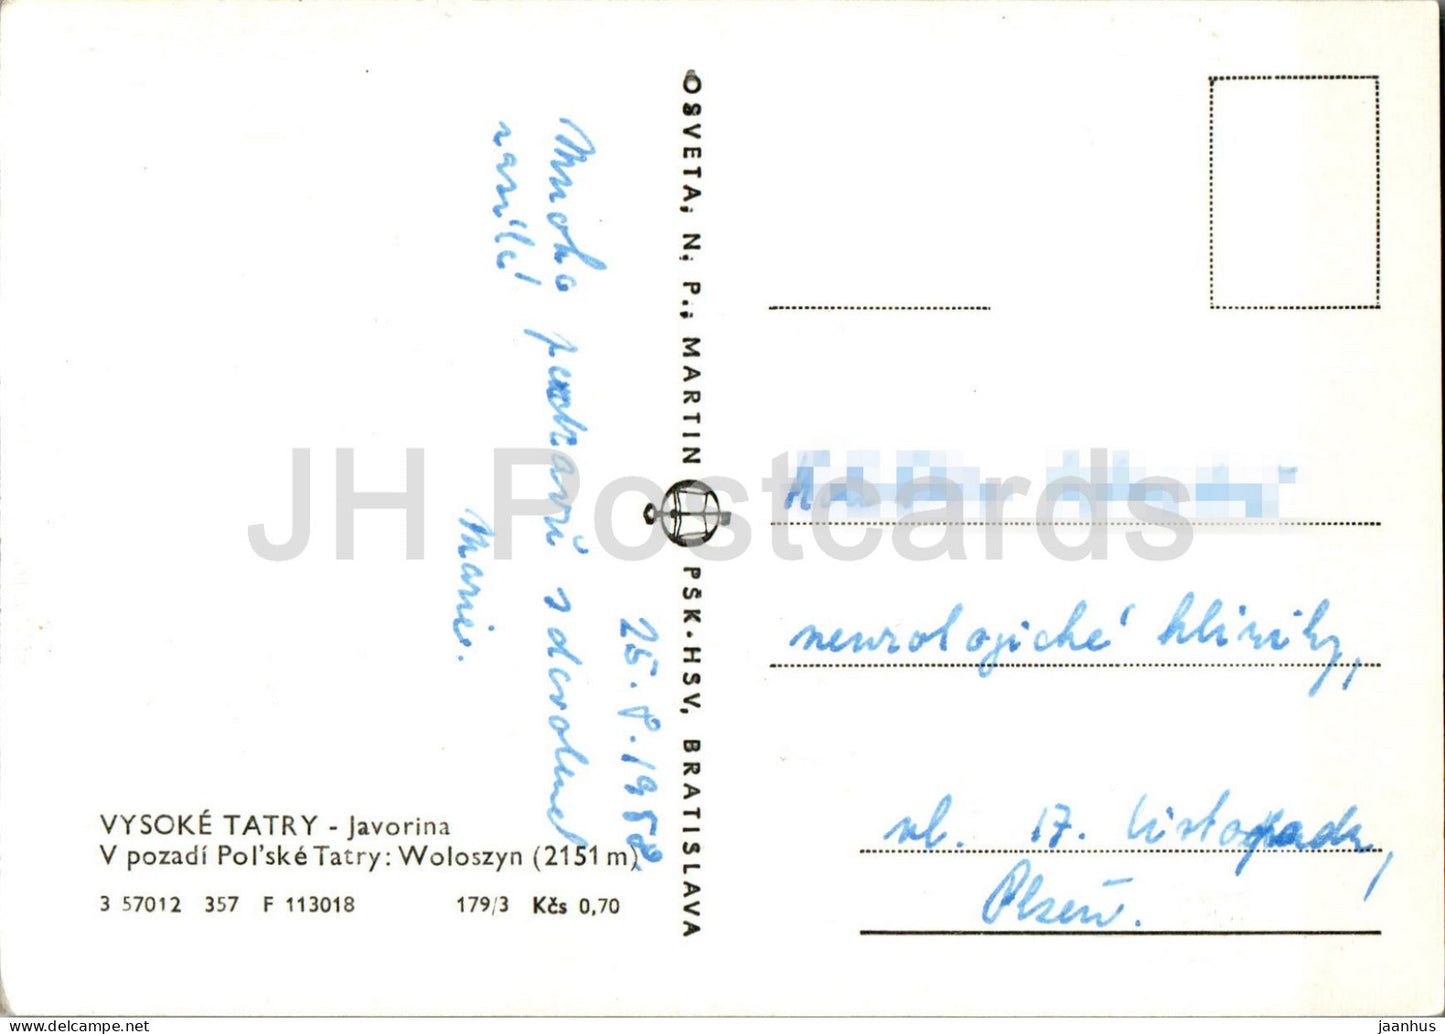 Vysoke Tatry - Javorina - V pozadi Polske Tatry - High Tatras - old postcard - 1958 - Slovakia - Czechoslovakia - used